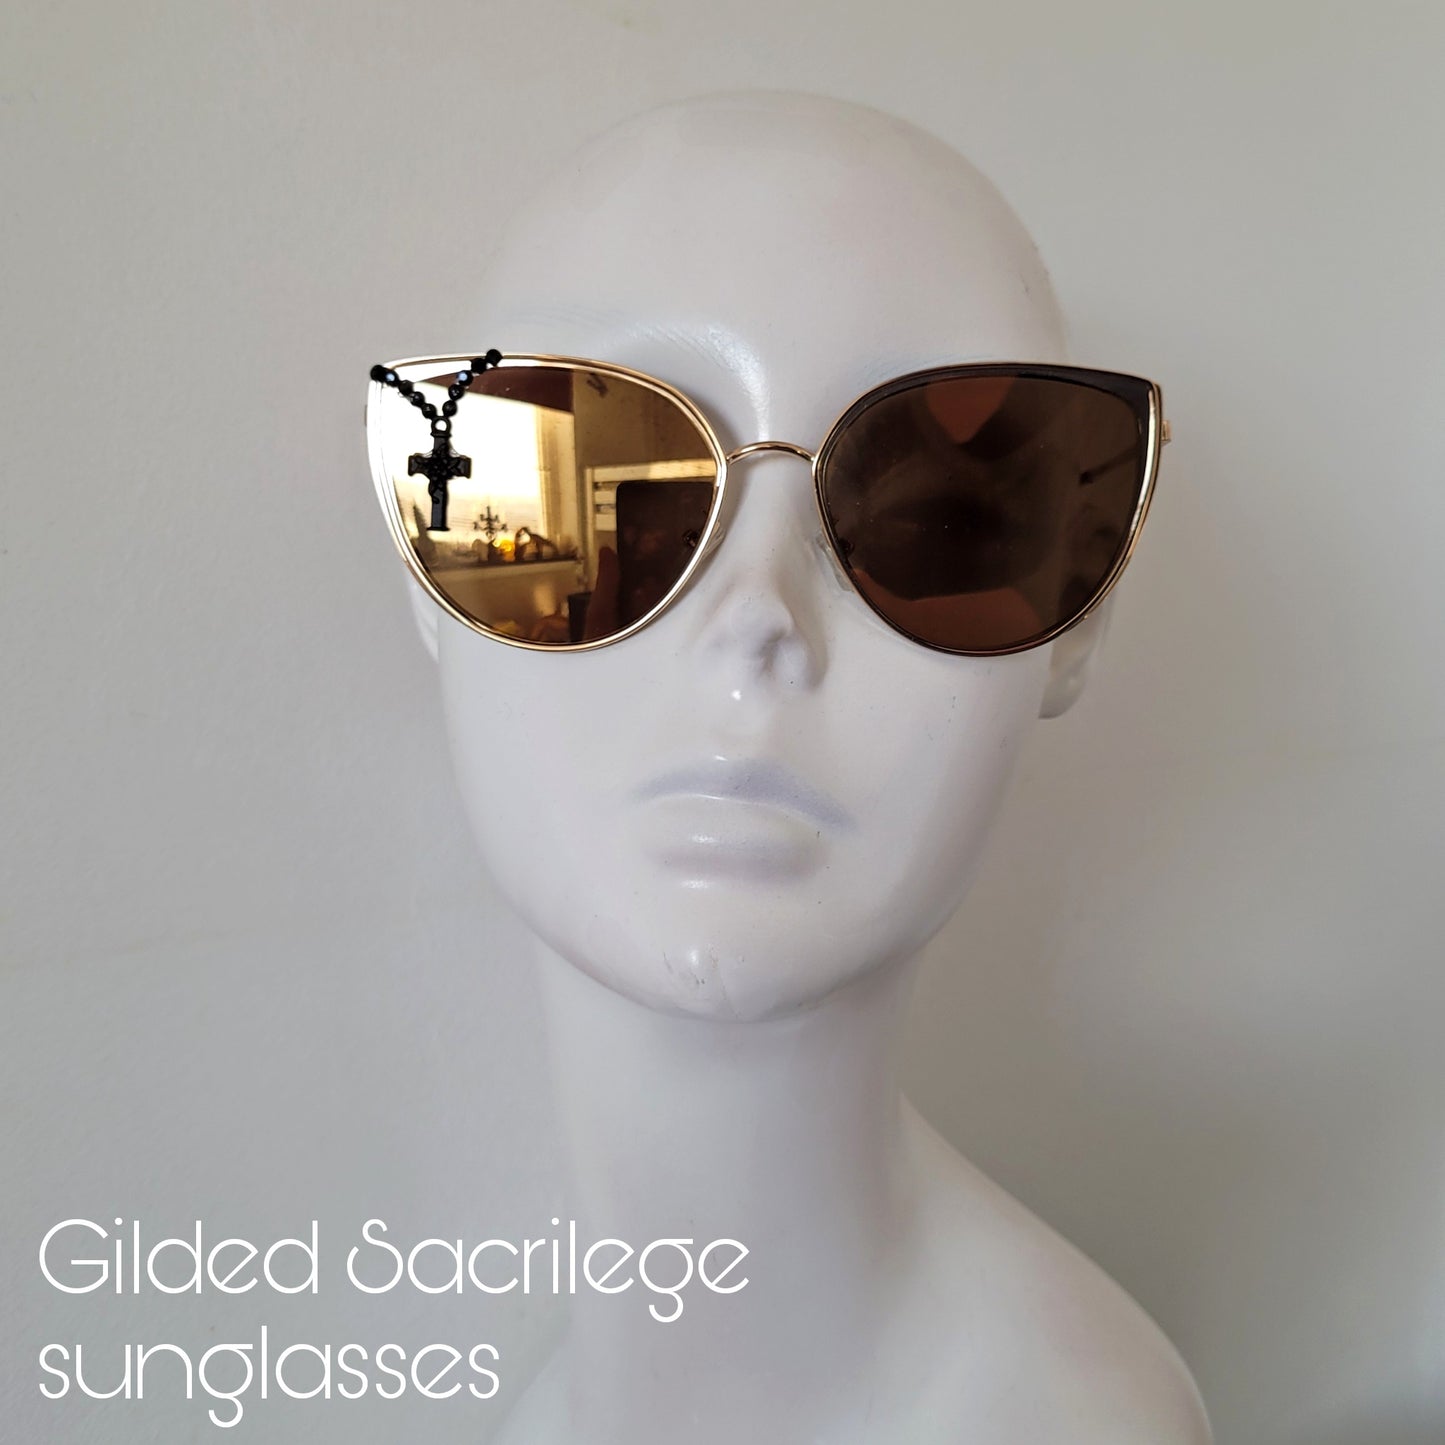 Sacrilegious Collection: The Gilded Sacrilege sunglasses